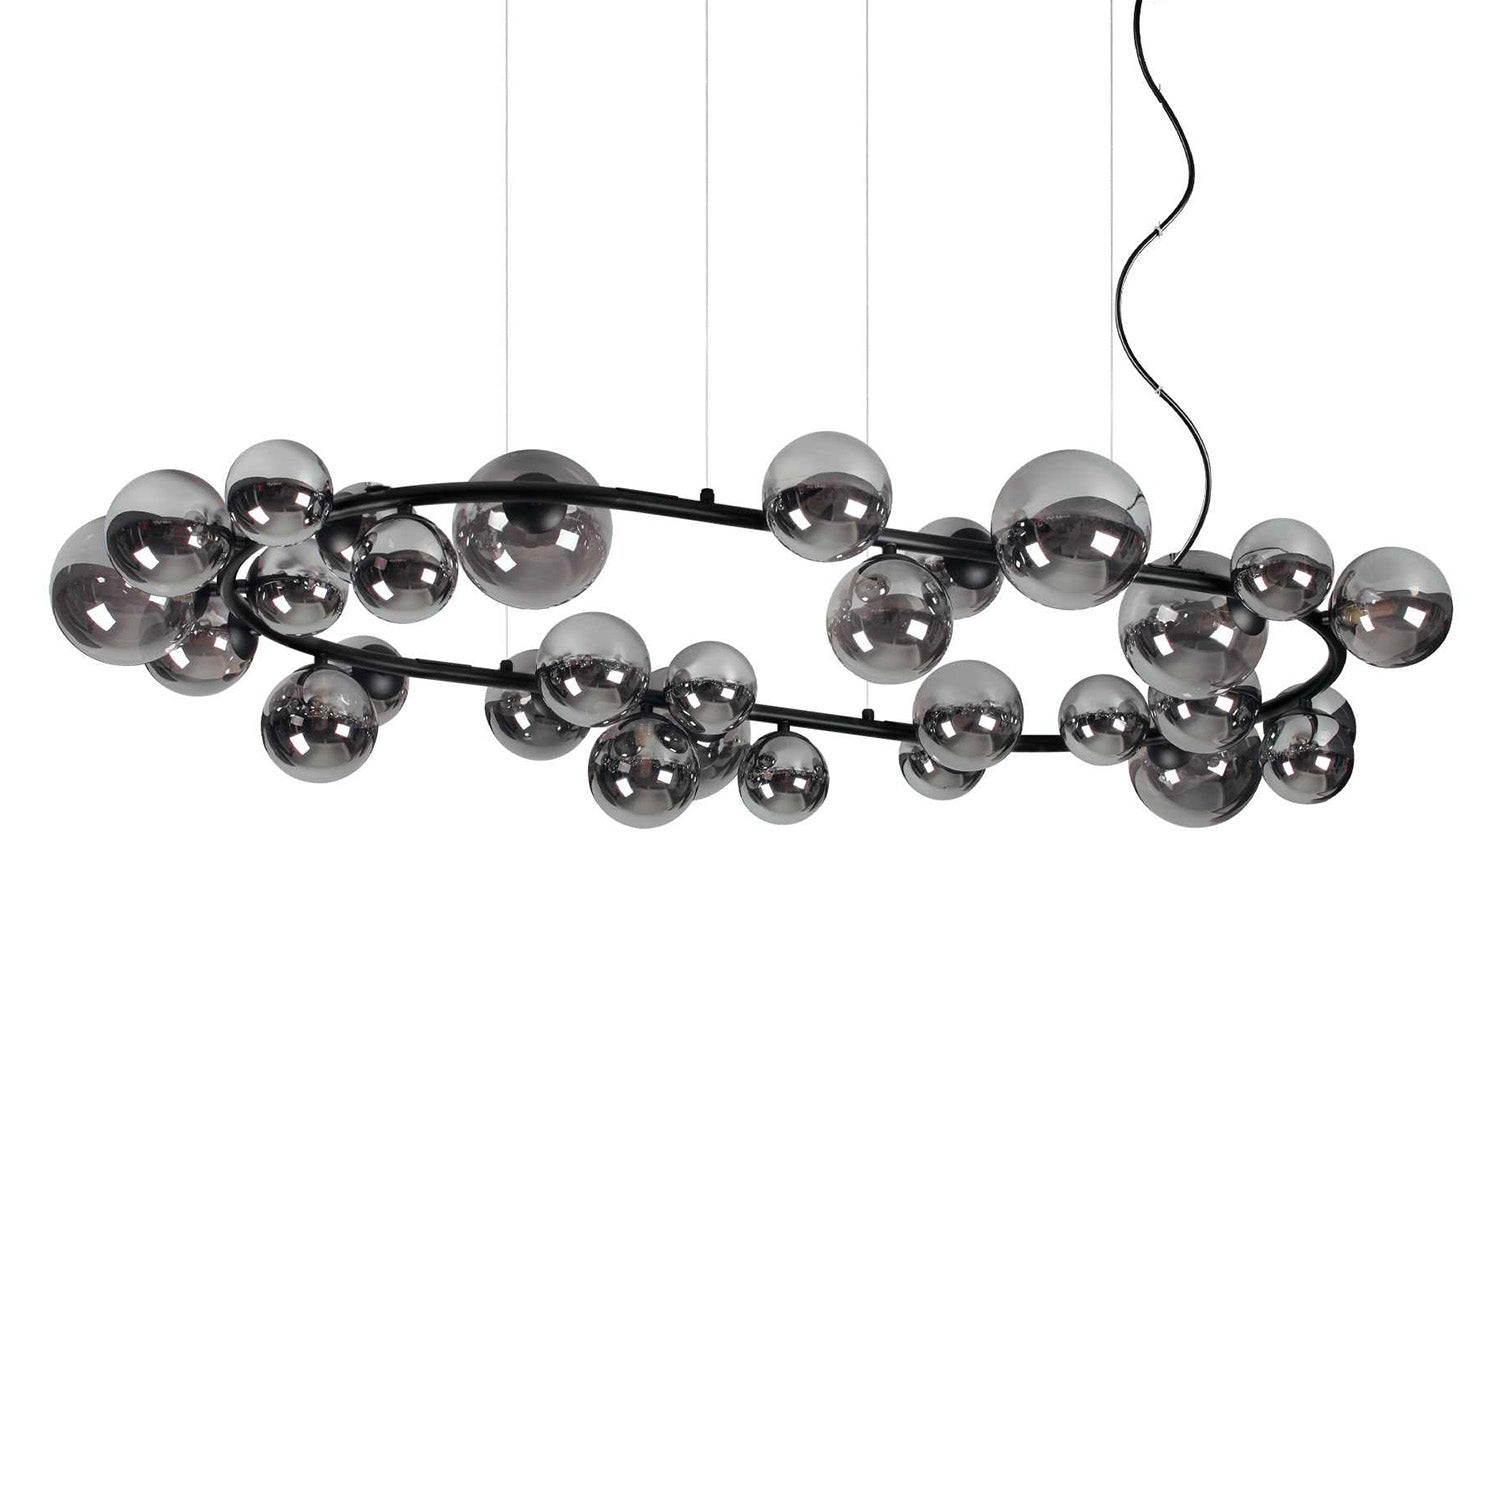 PERLAGE - Oval art deco pendant light with glass balls